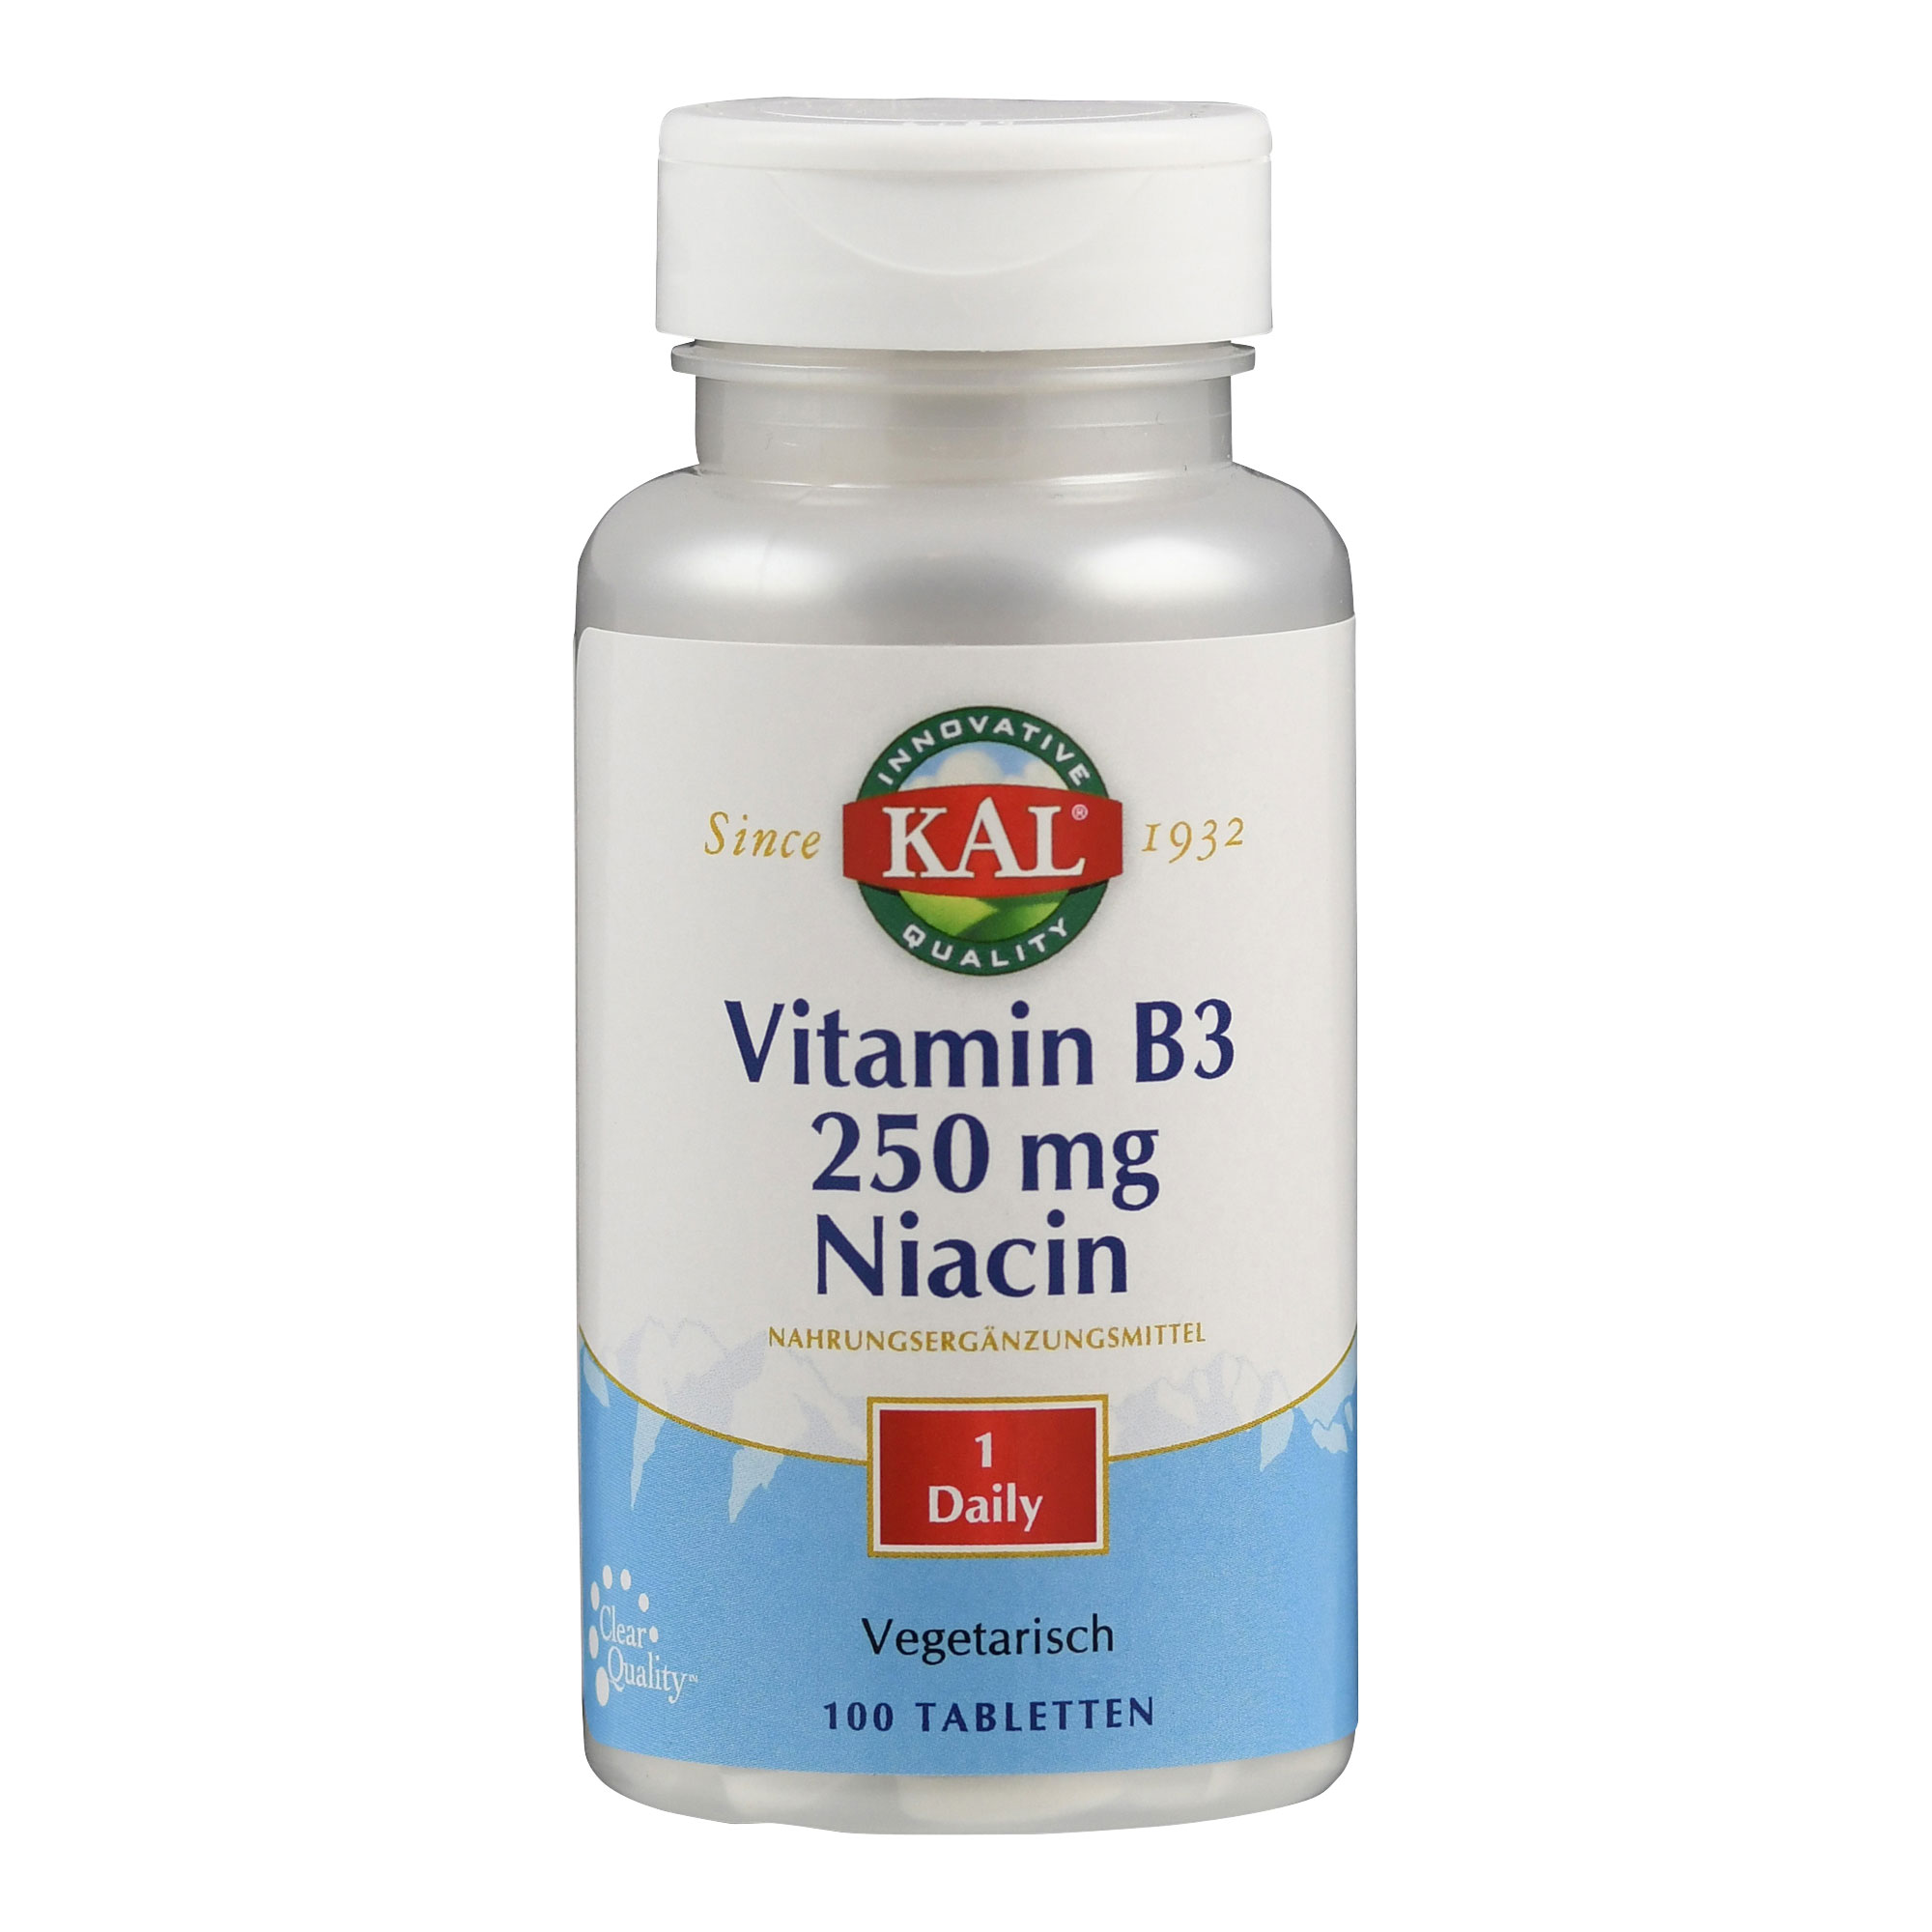 Nahrungsergänzungsmittel mit Vitamin B3.